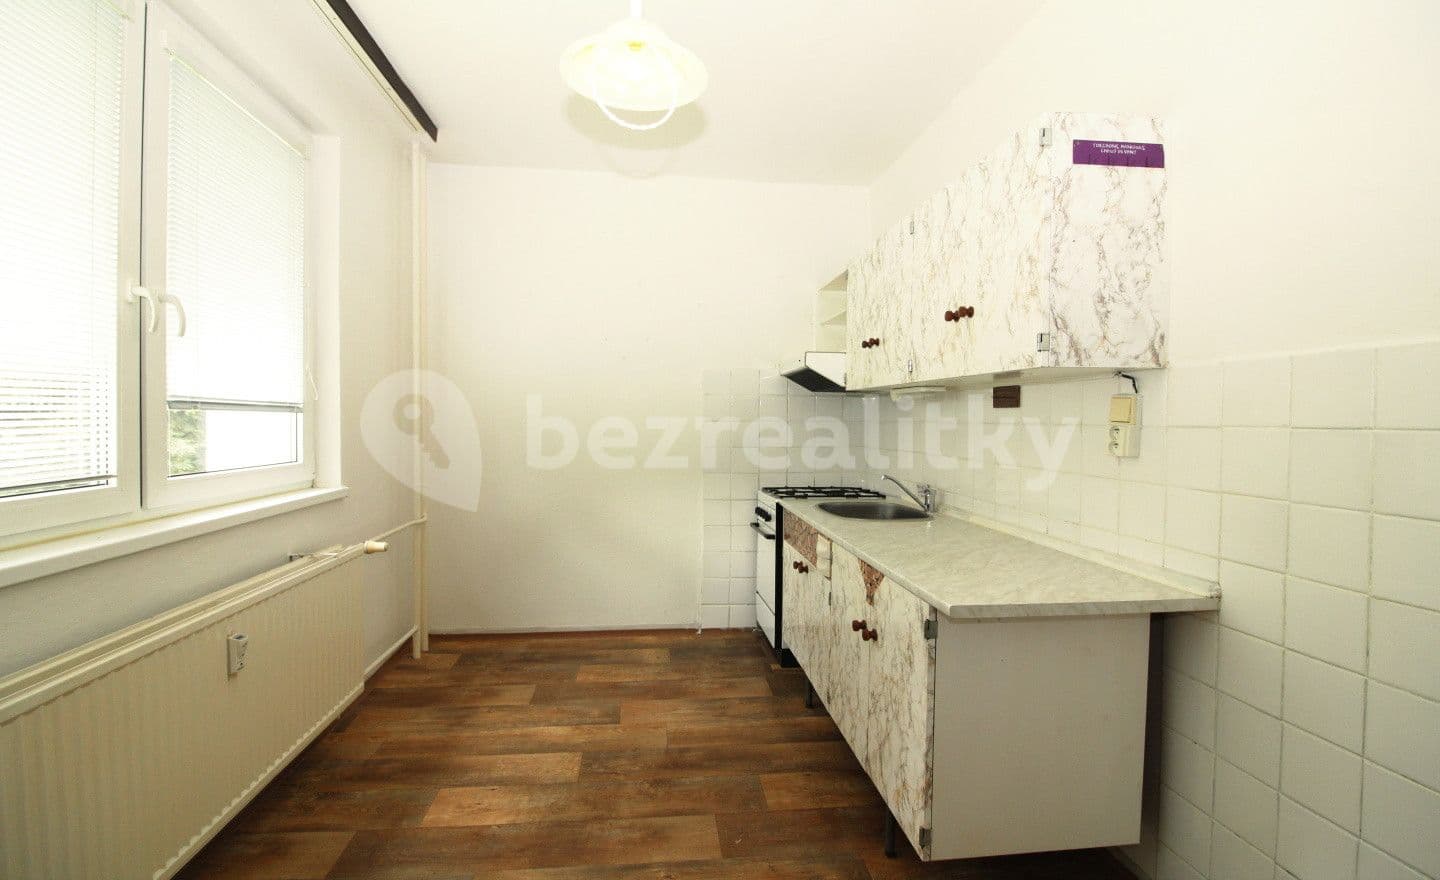 Predaj bytu 2-izbový 56 m², Severní, Česká Lípa, Liberecký kraj